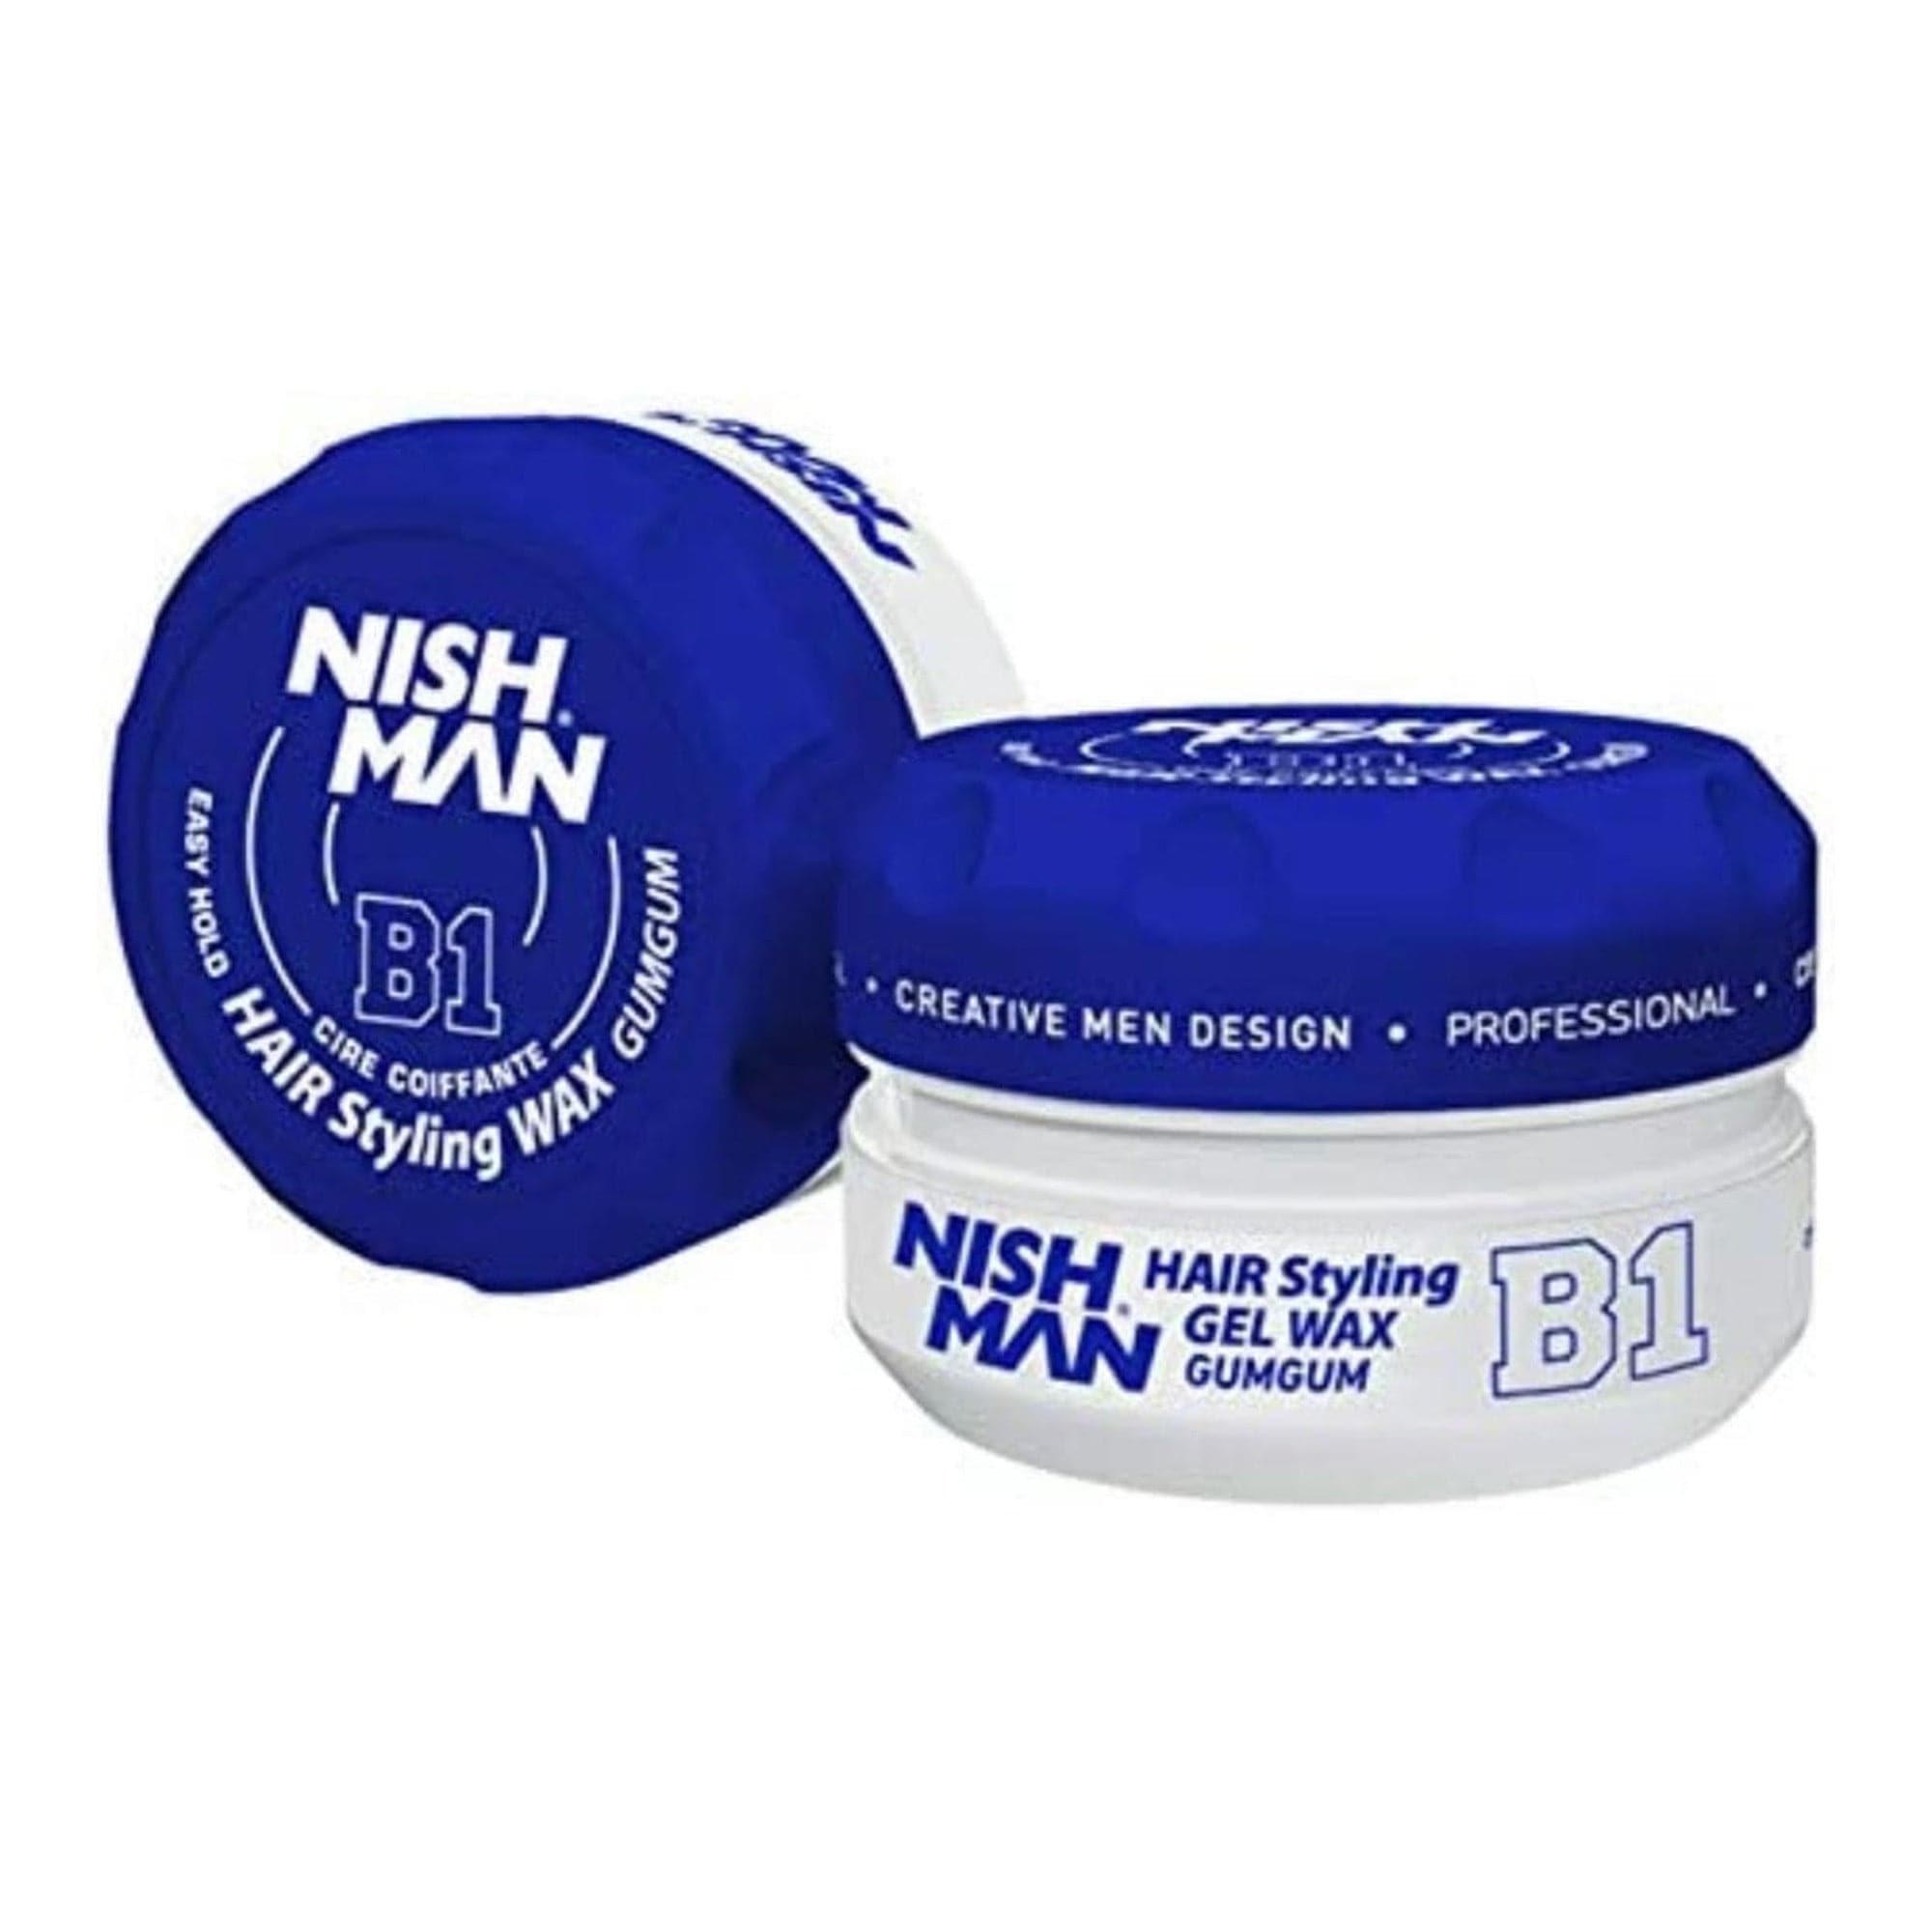 Nishman - Hair Styling Gel Wax B1 Gumgum 150ml